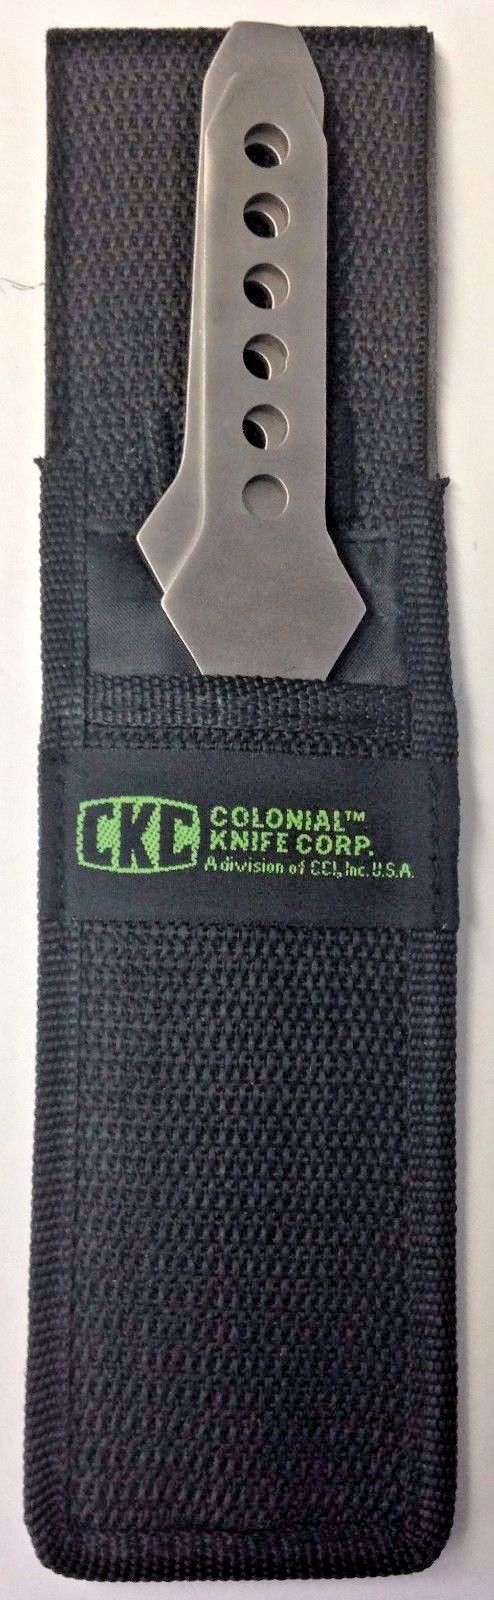 CKC 1081058 Colonial Knife Throwing Knives 1 Pair Silver BULK